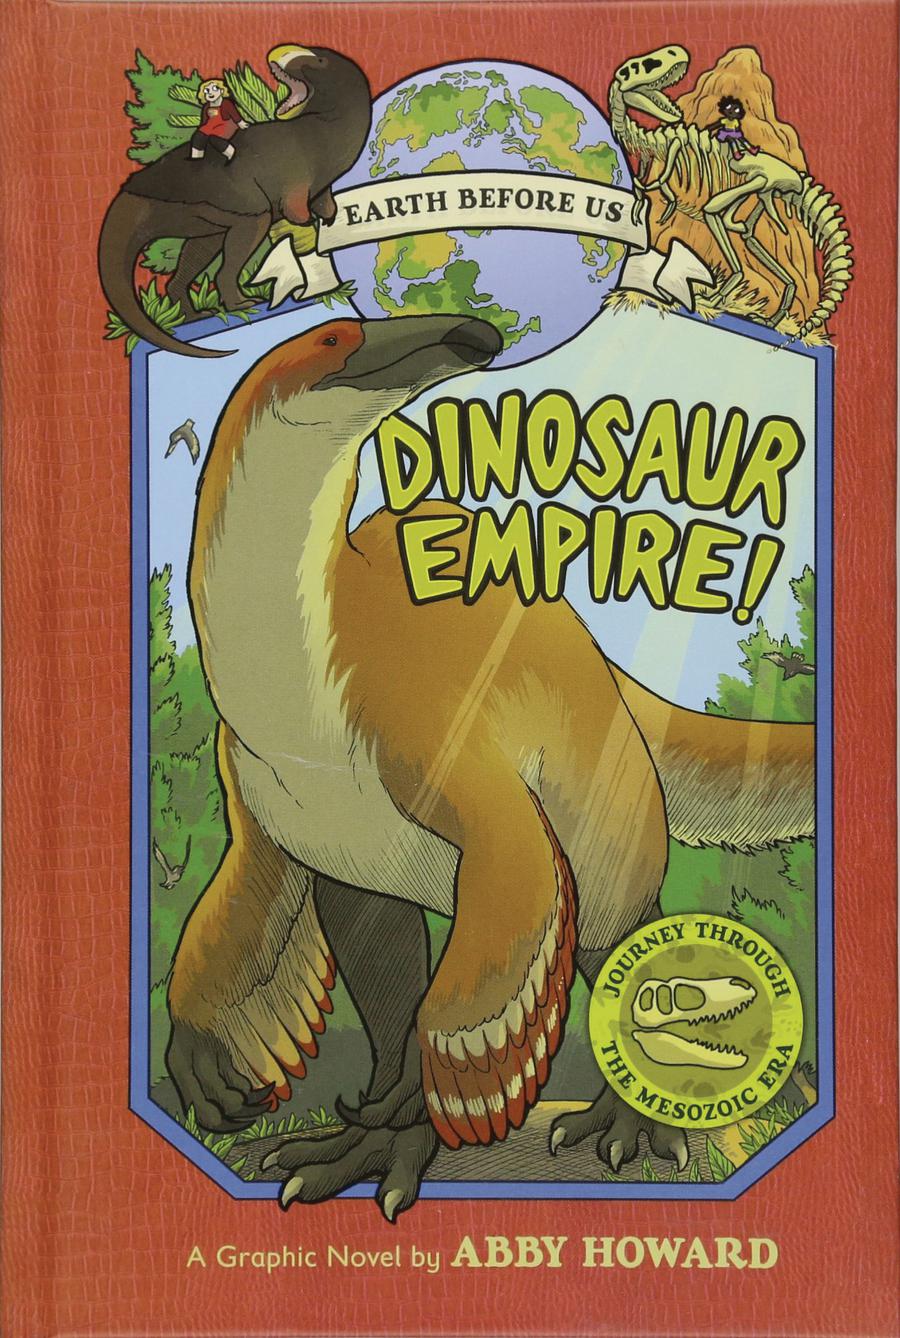 Earth Before Us Vol 1 Dinosaur Empire TP